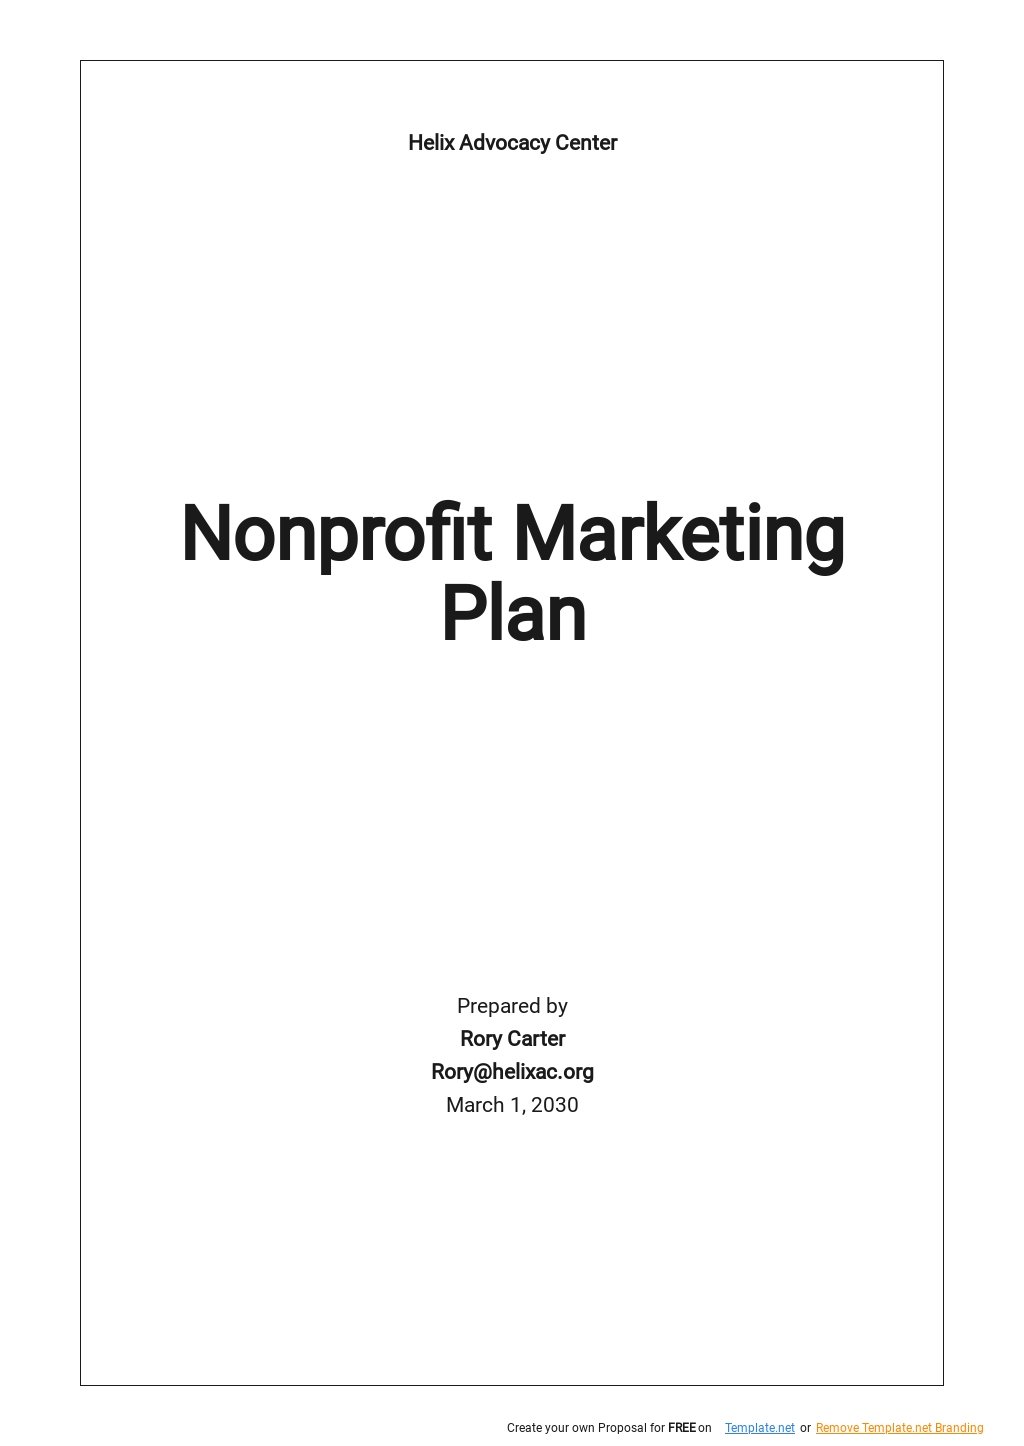 NEW Nonprofit Marketing Plan Template